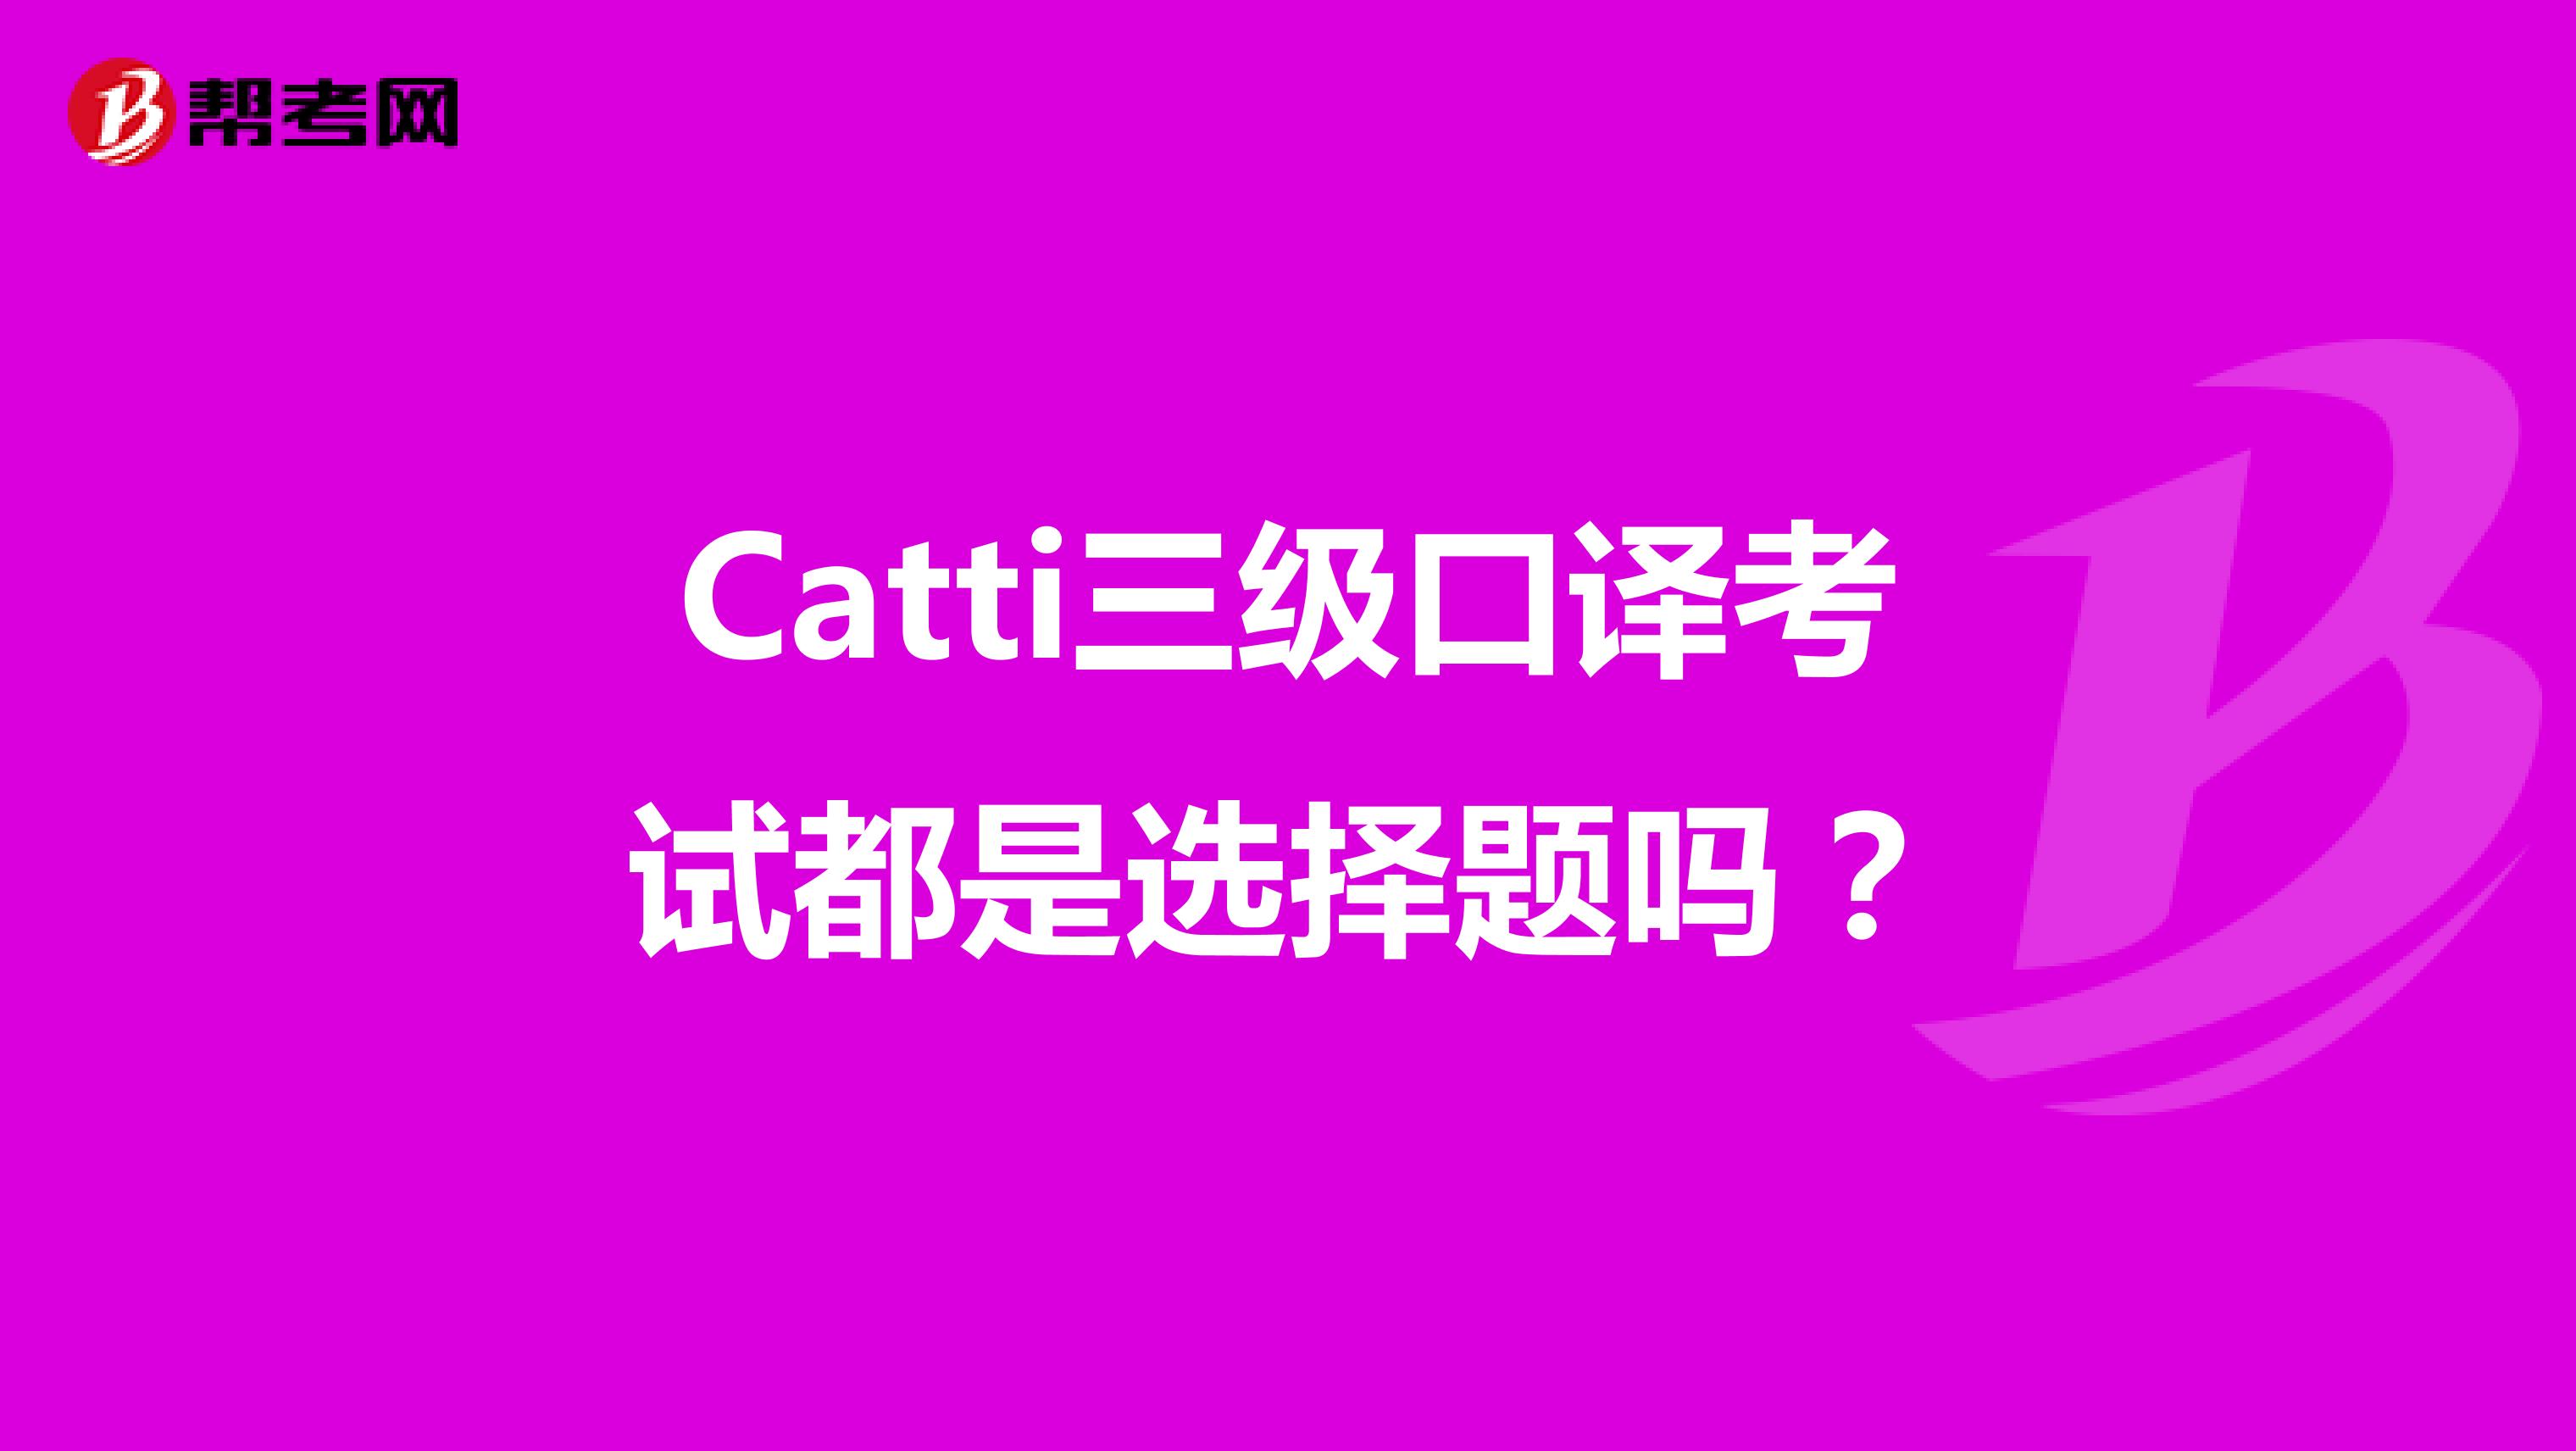 Catti三级口译考试都是选择题吗？